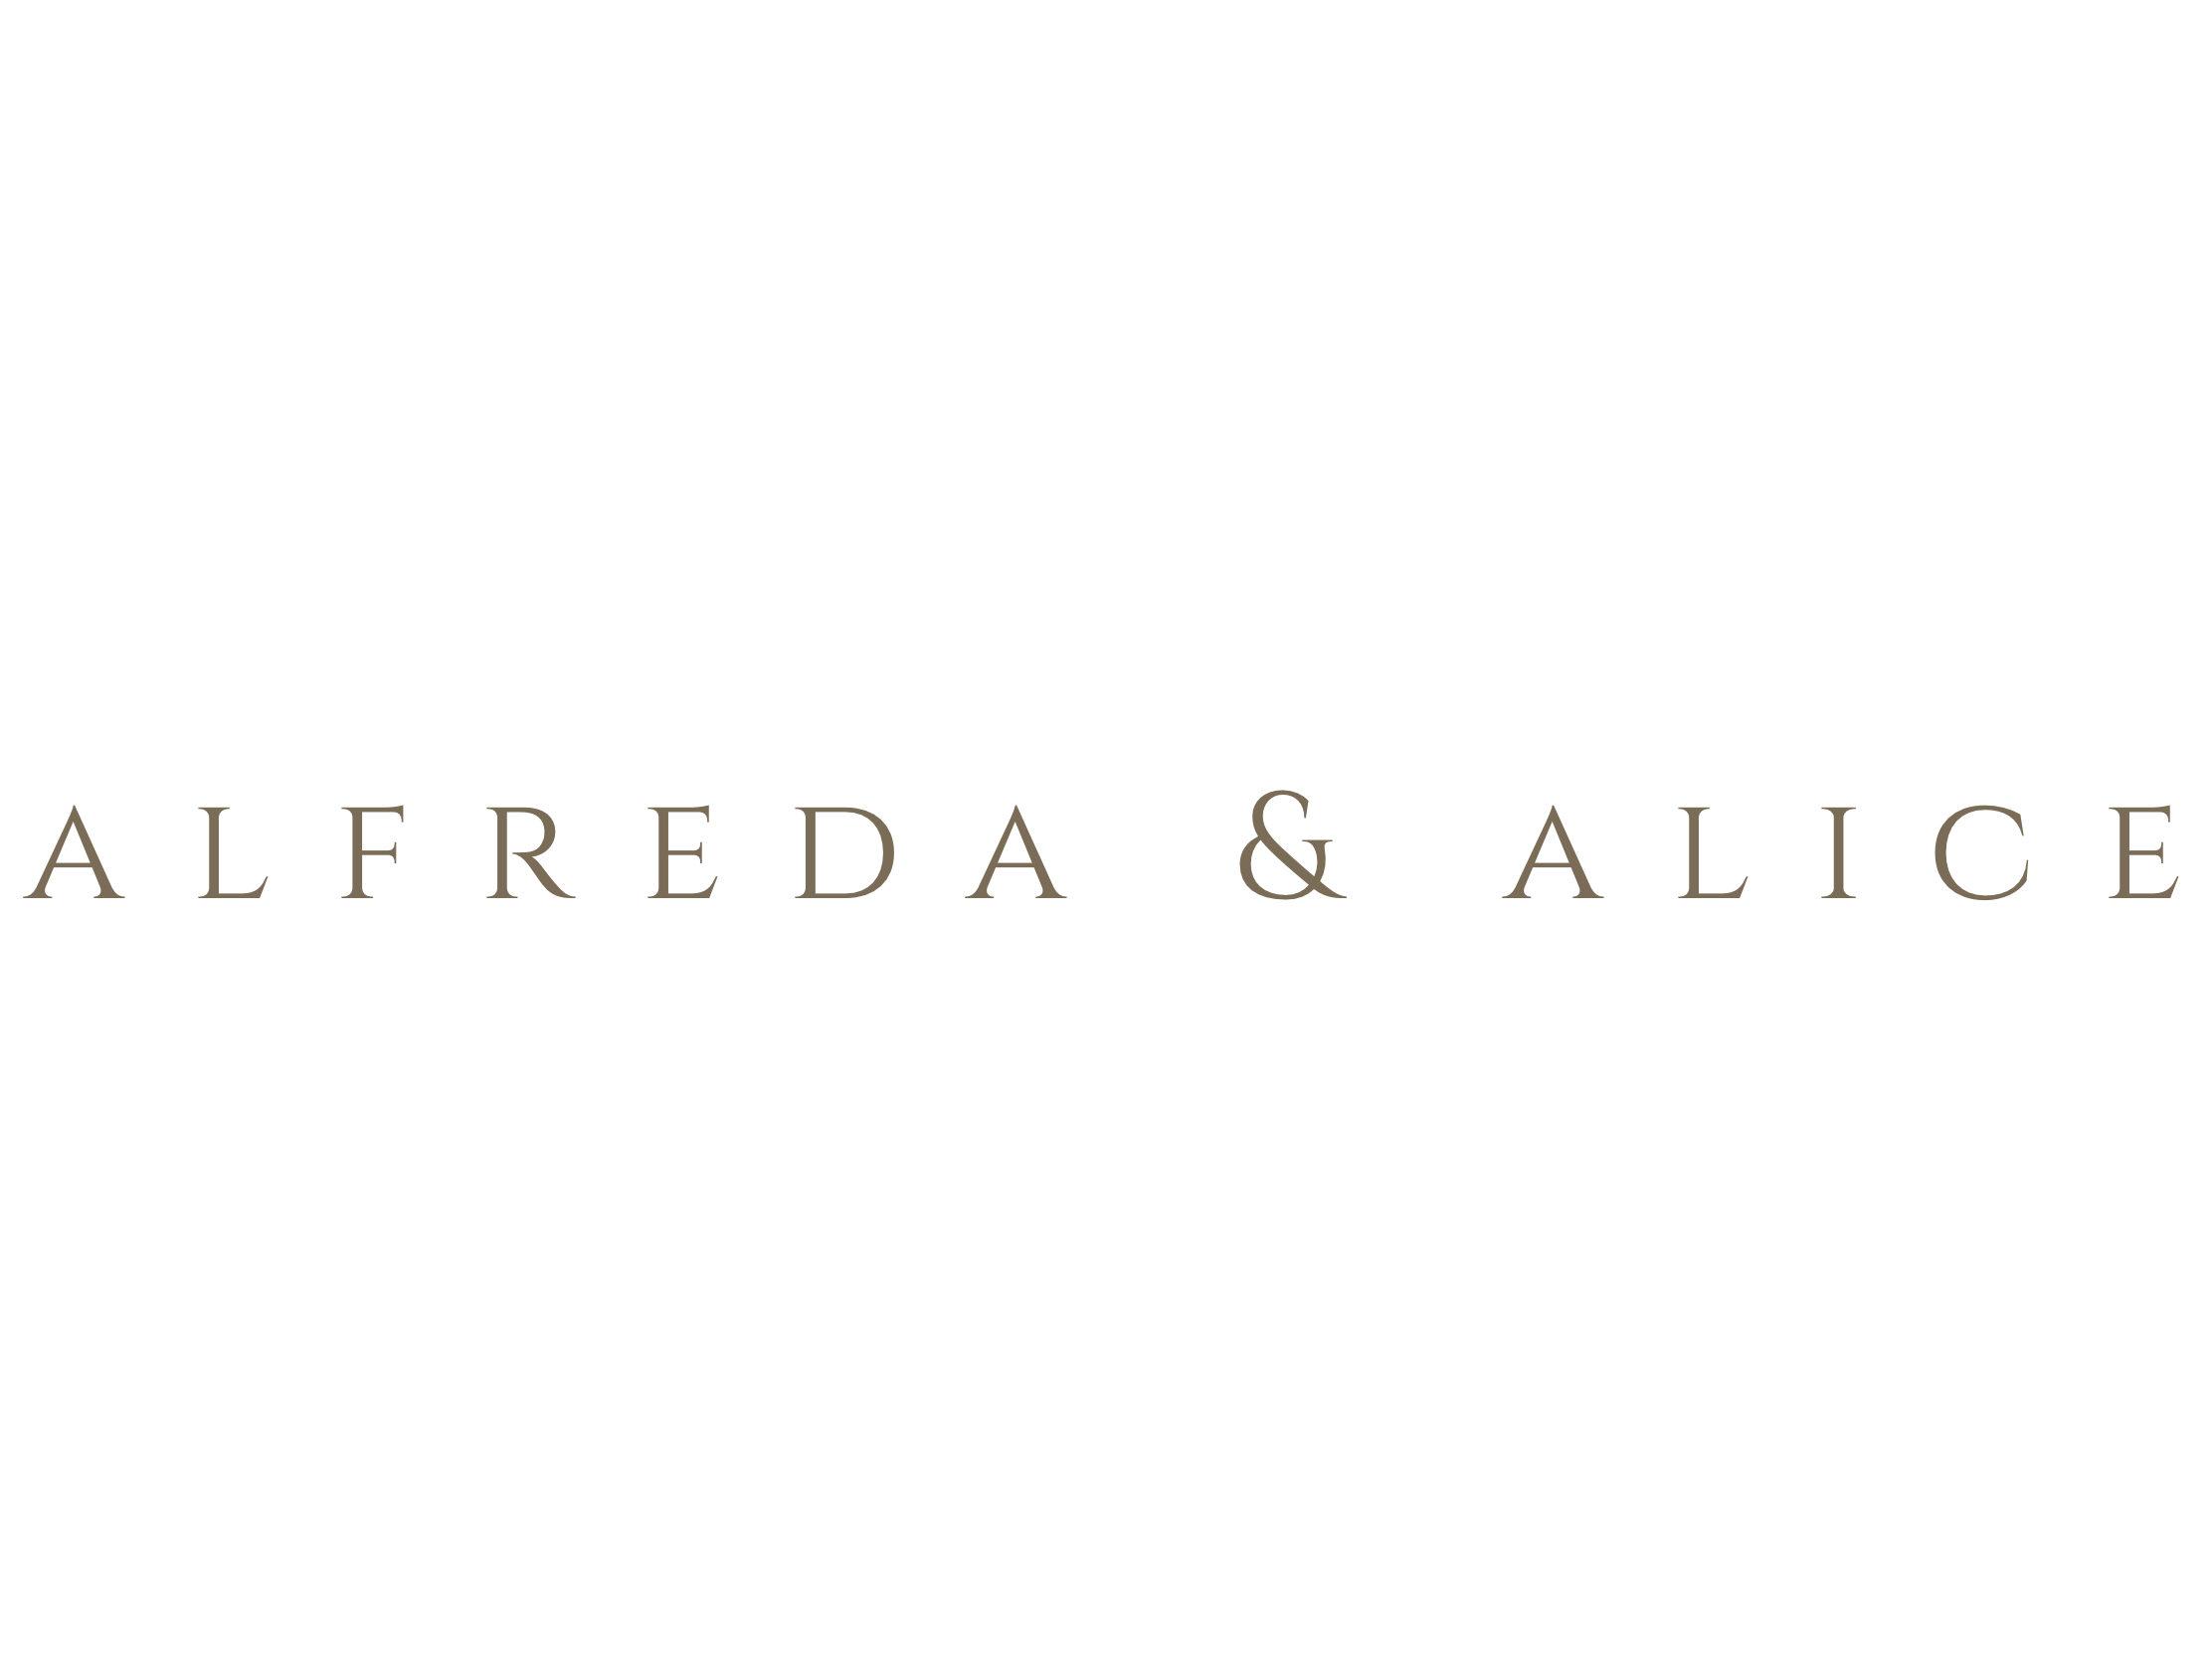 Alfreda and Alice